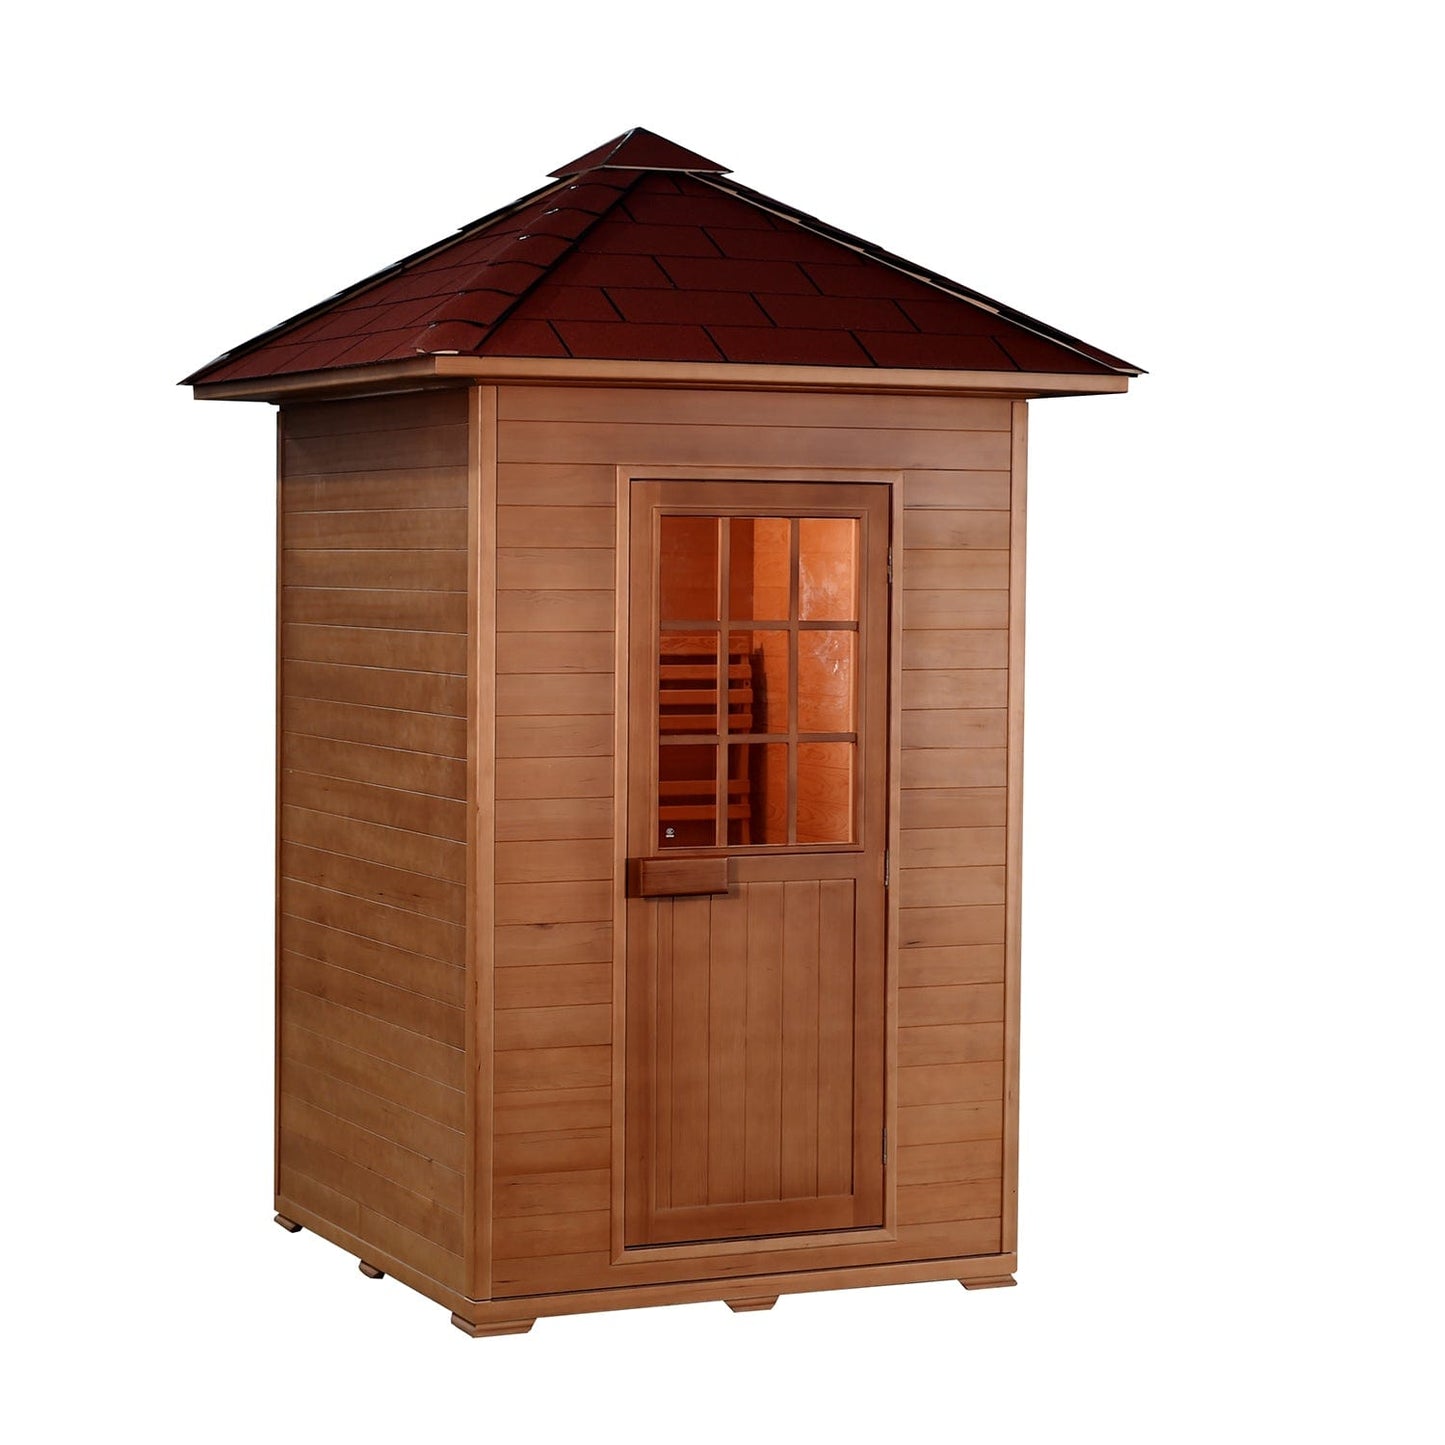 Sunray Eagle 2-Person Outdoor Traditional Sauna